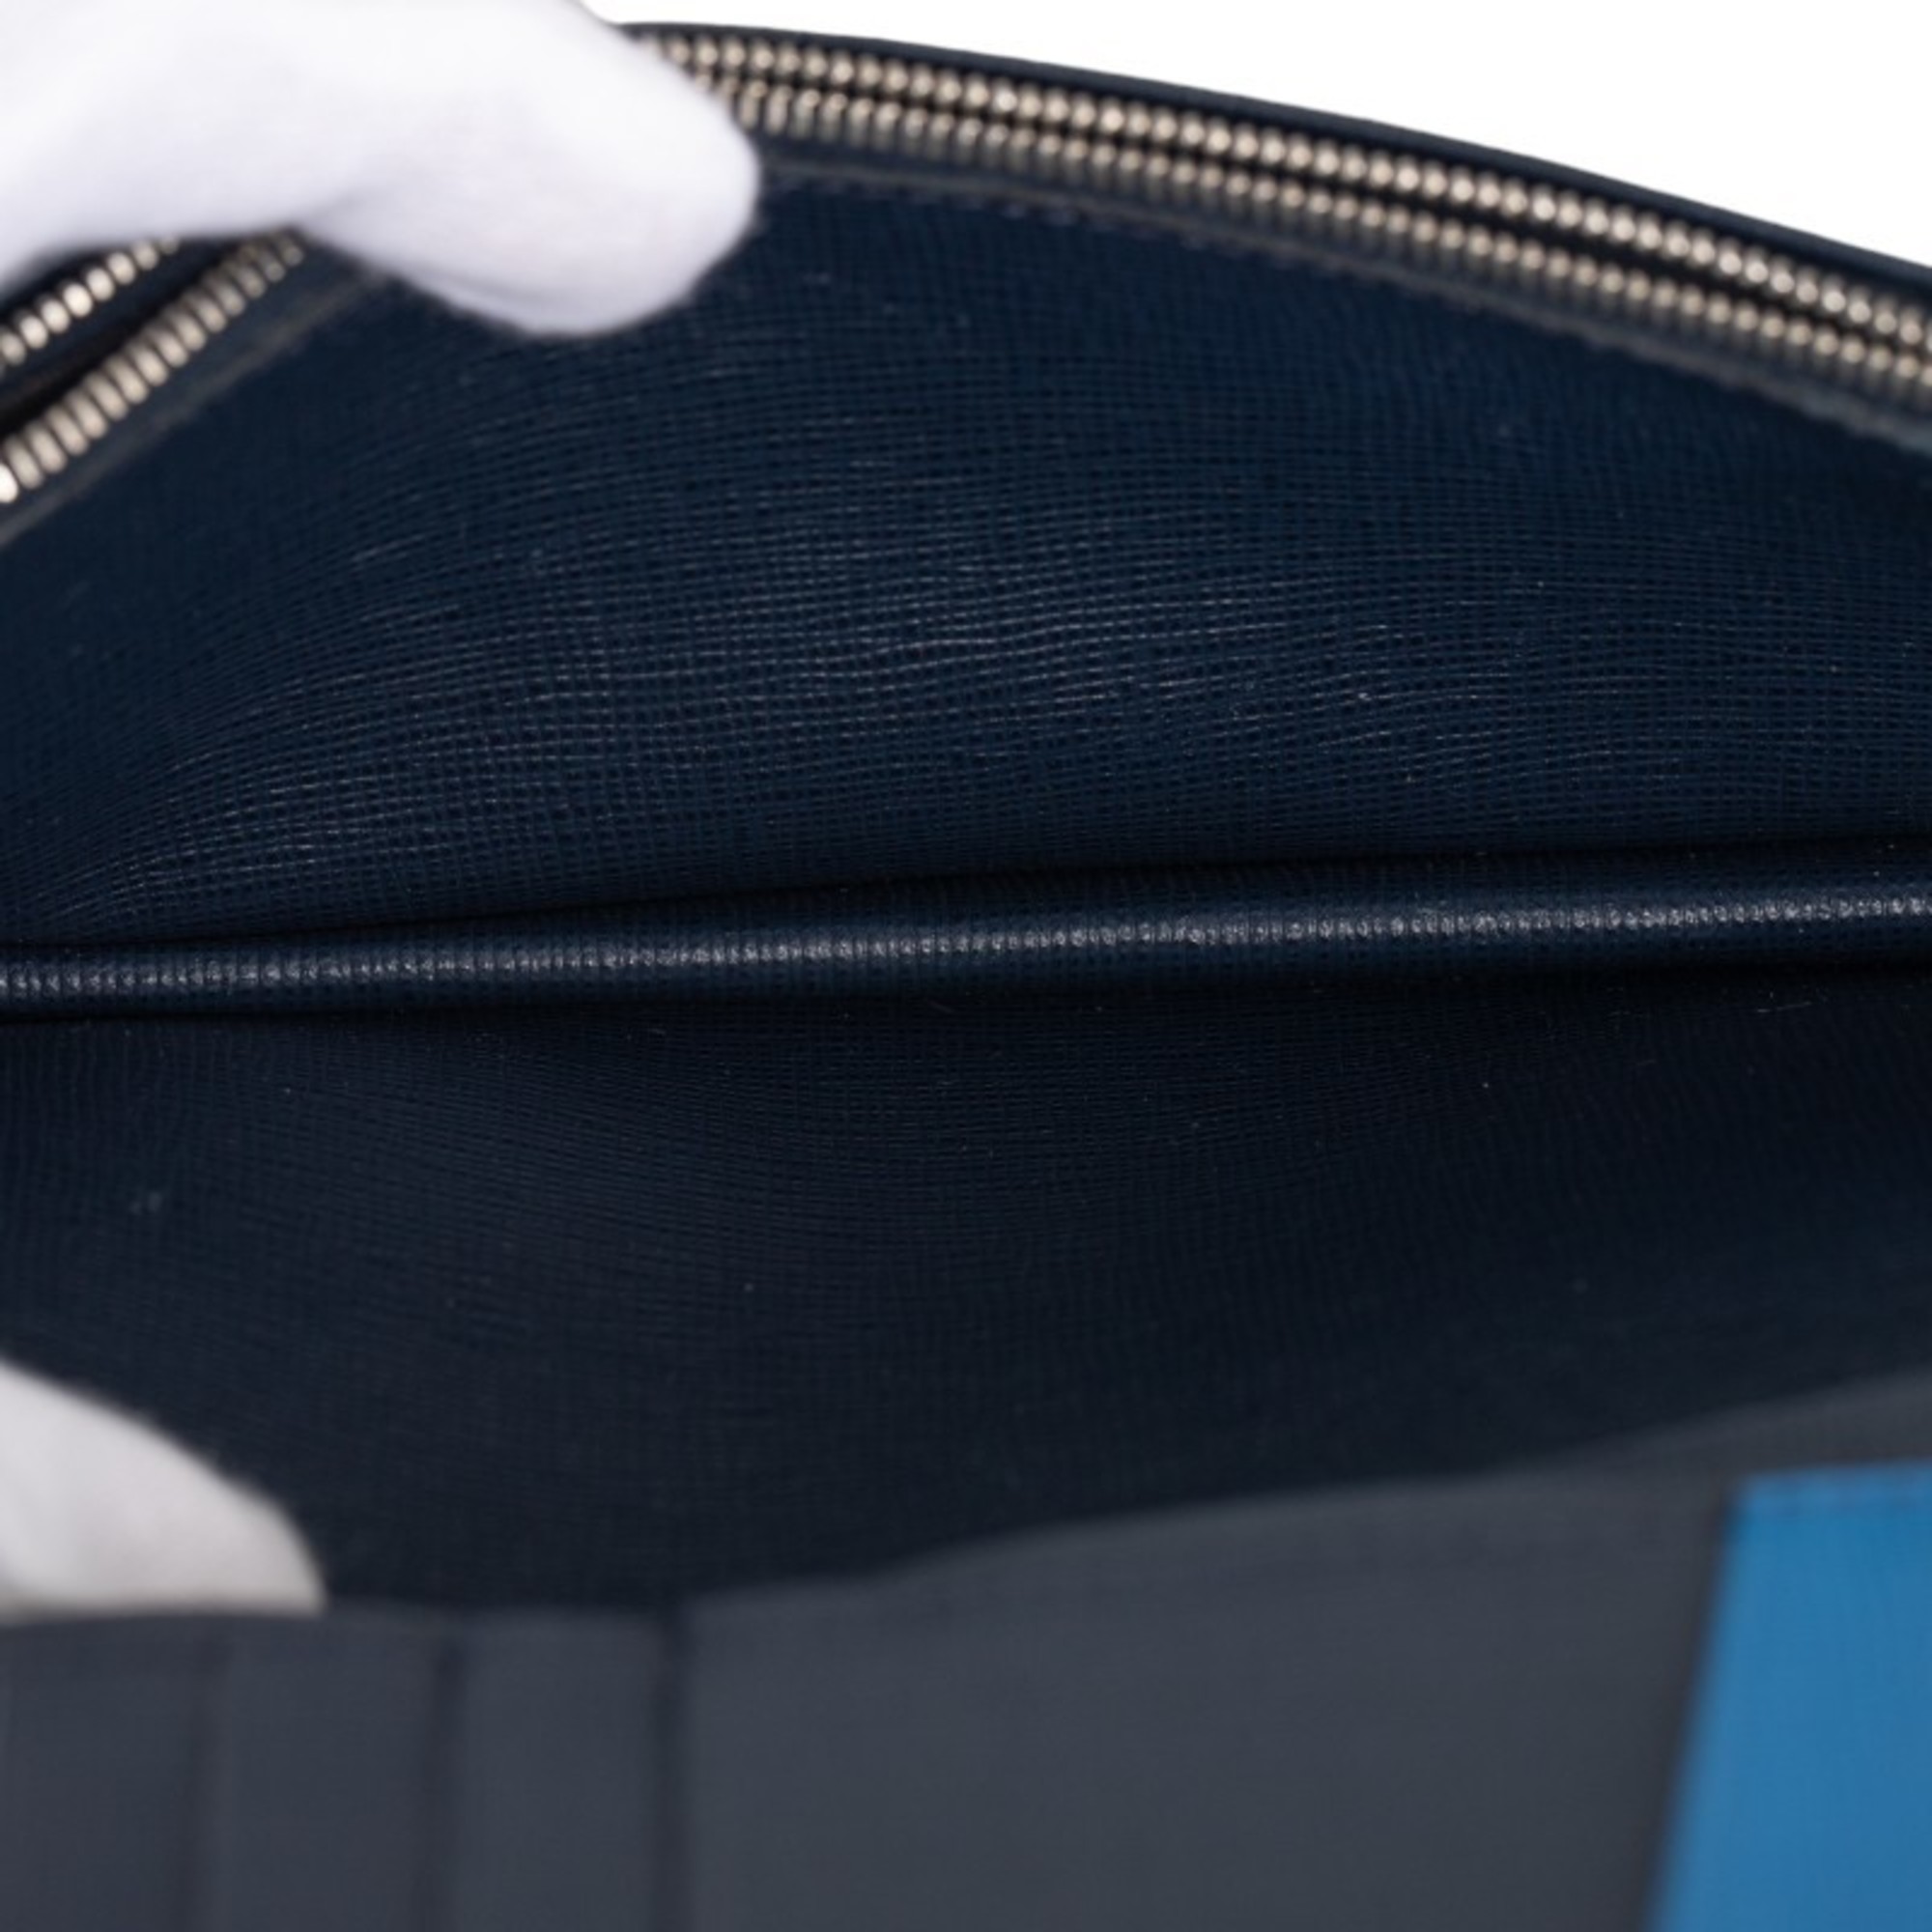 Fendi long wallet blue black leather ladies FENDI